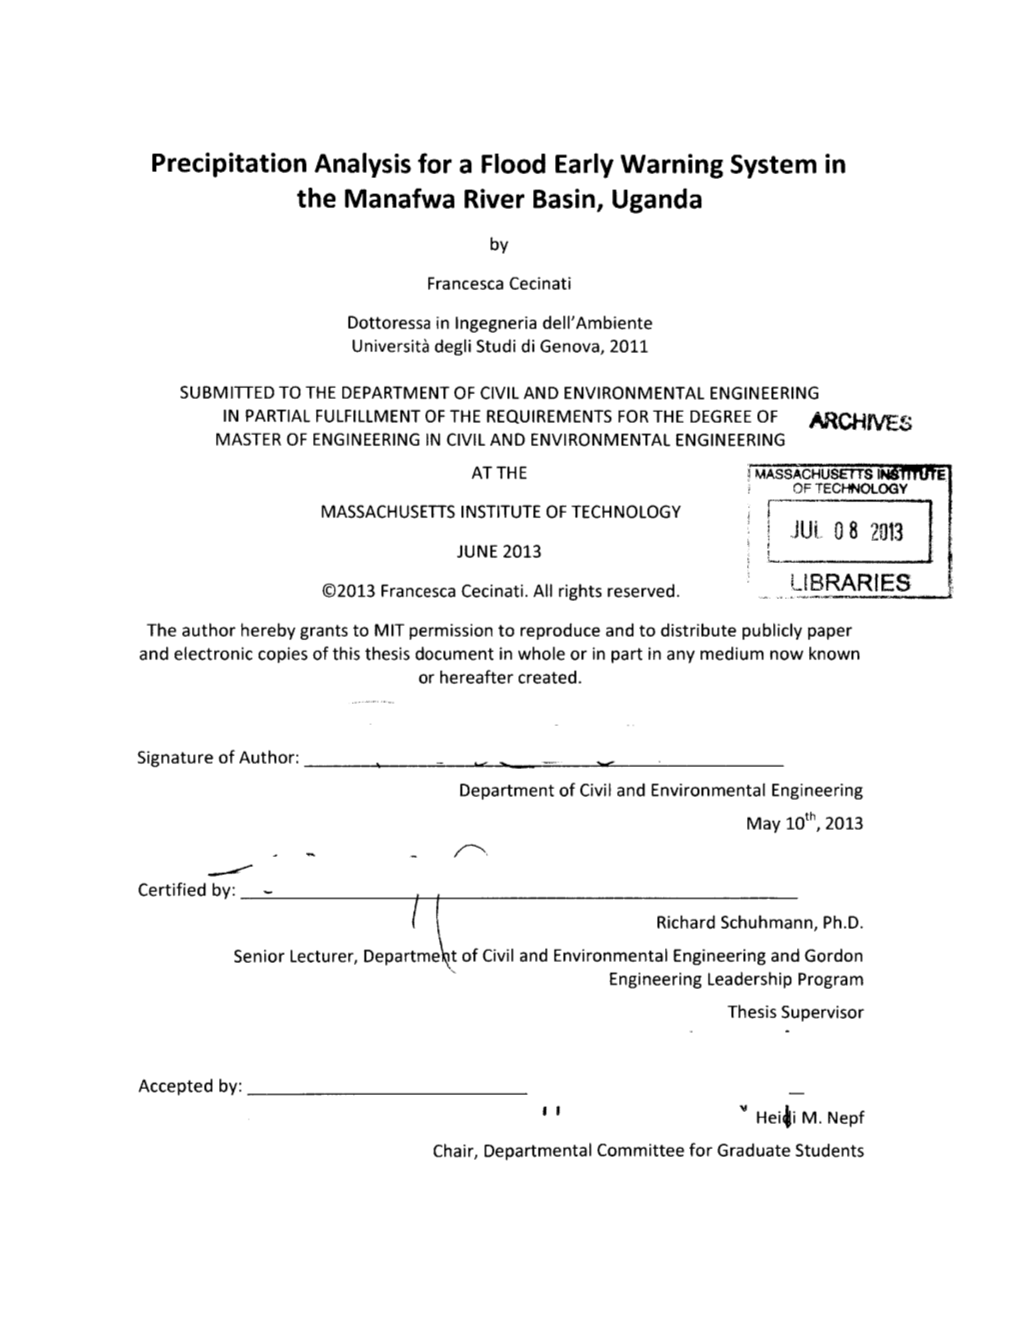 Precipitation Analysis for a Flood Early Warning System in the Manafwa River Basin, Uganda